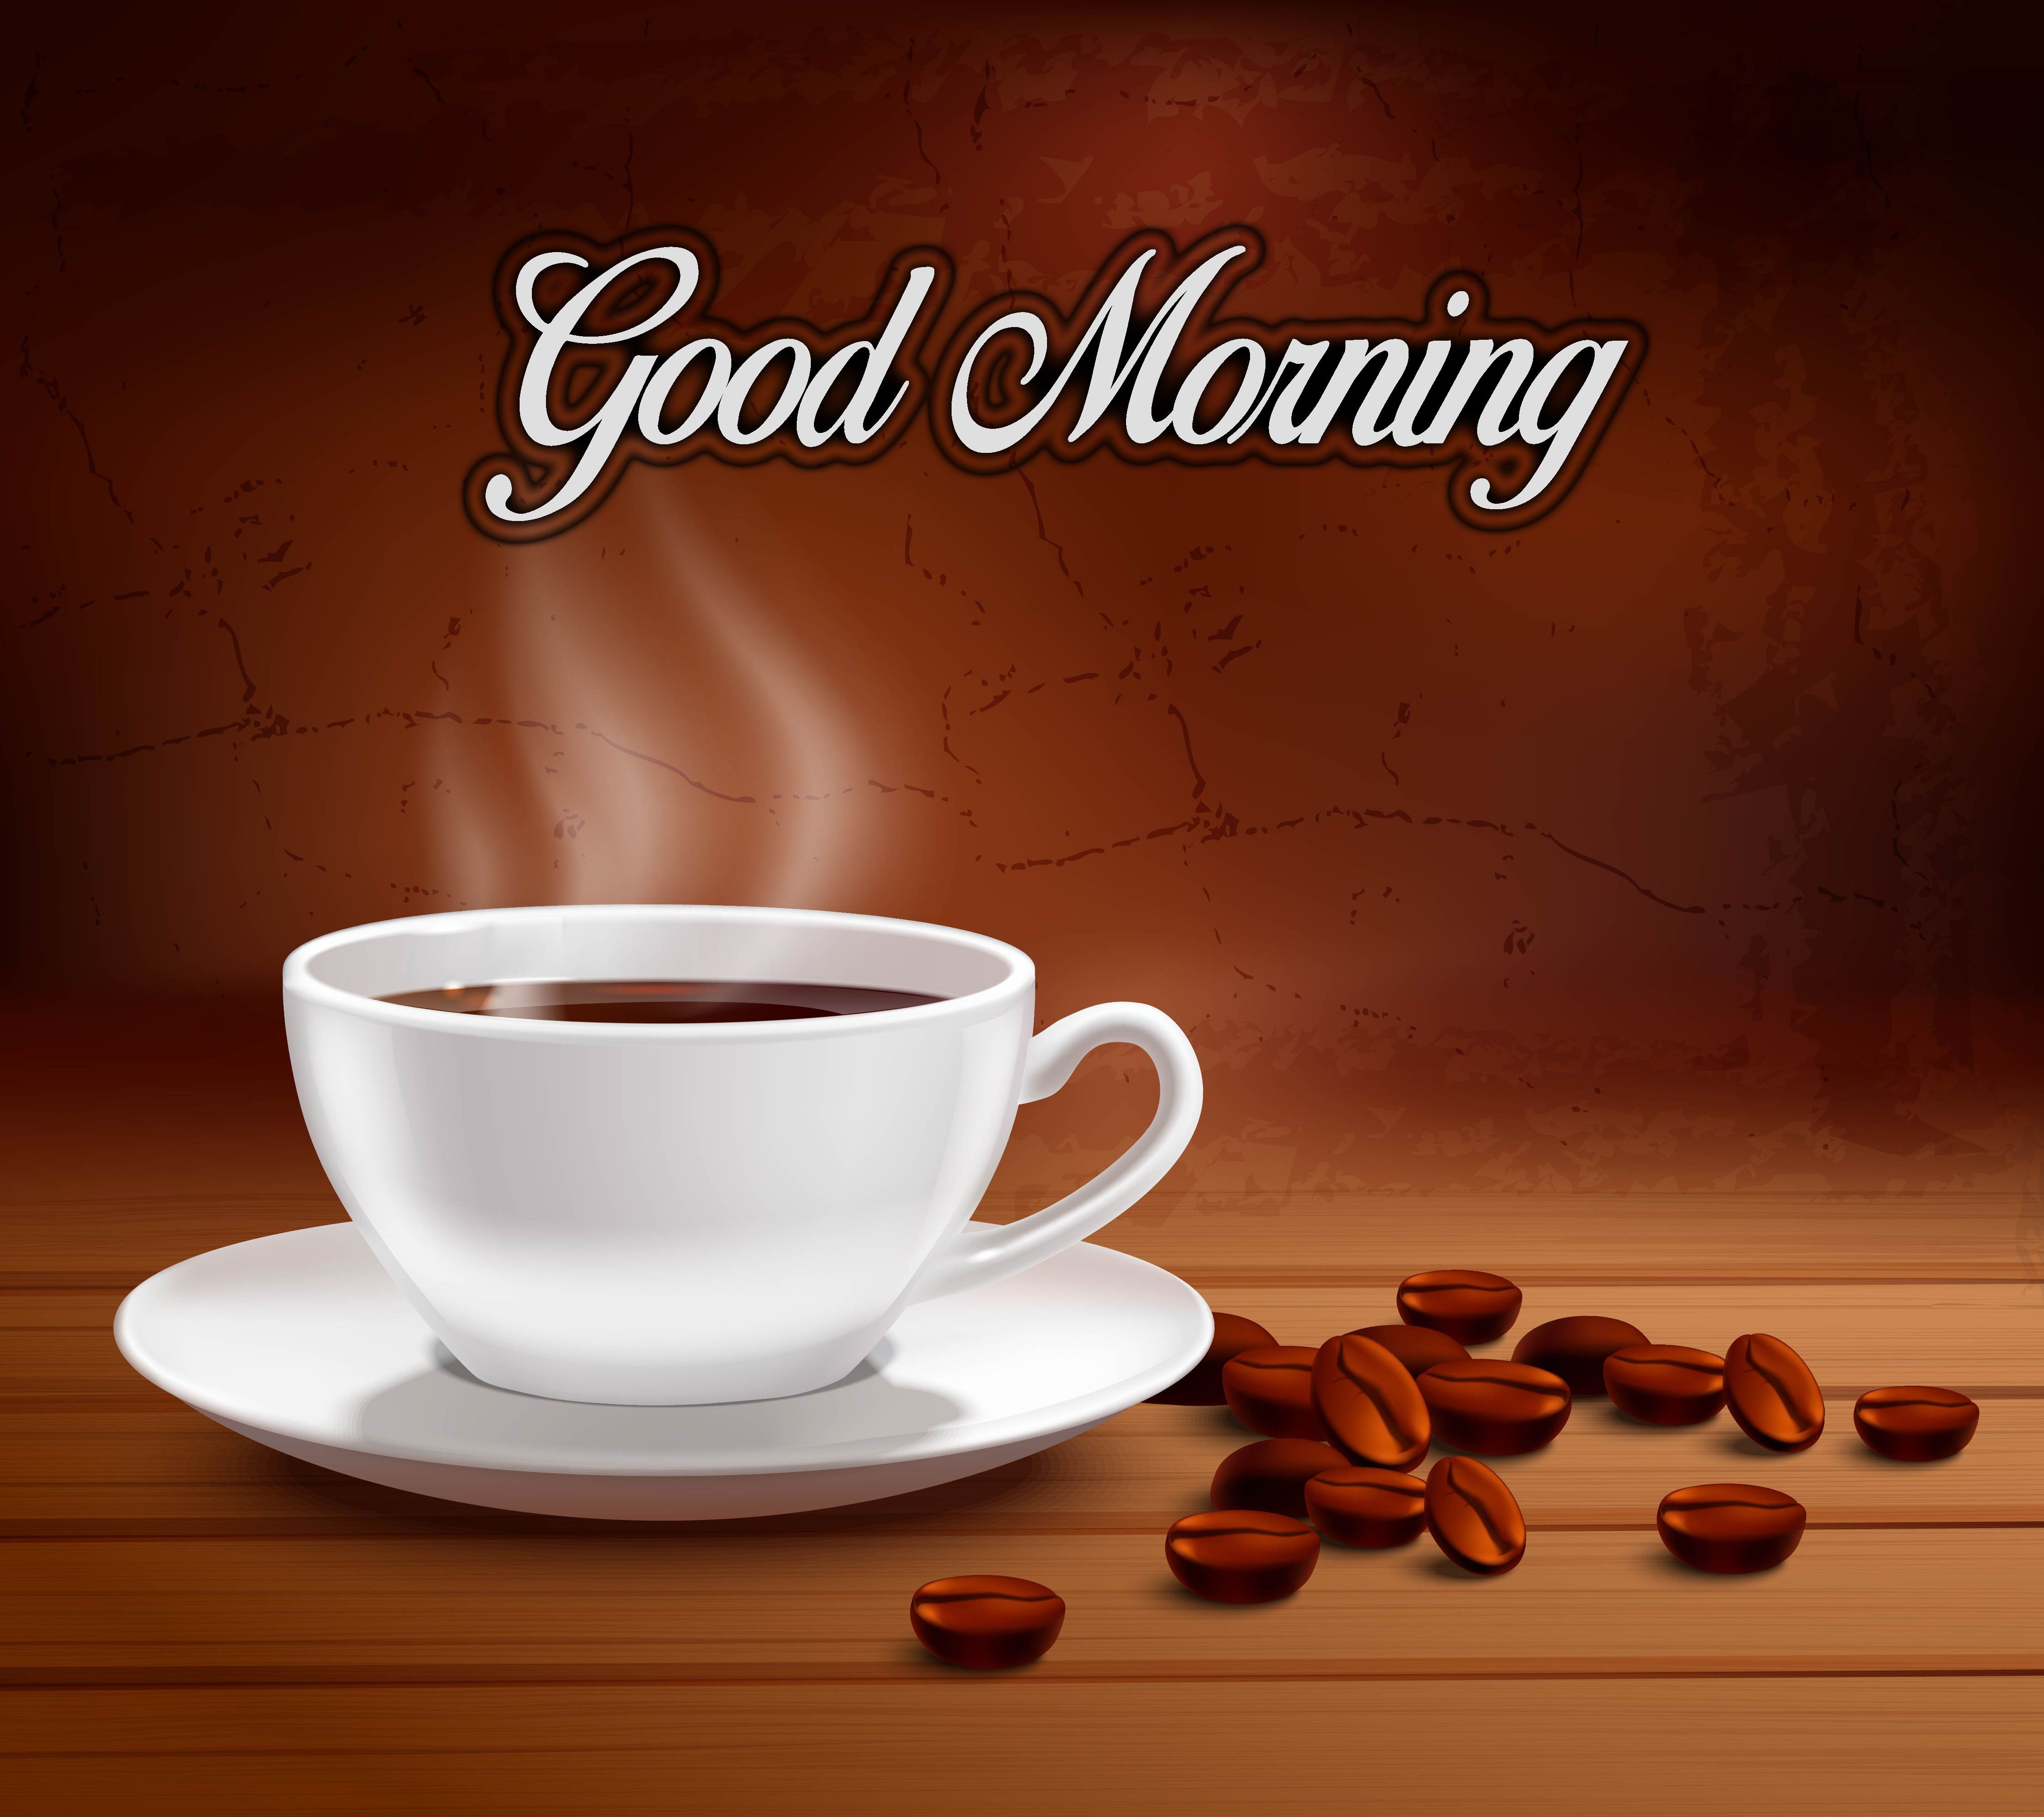 Good Morning Coffee Wallpaper. Good morning coffee, Good morning coffee image, Morning coffee